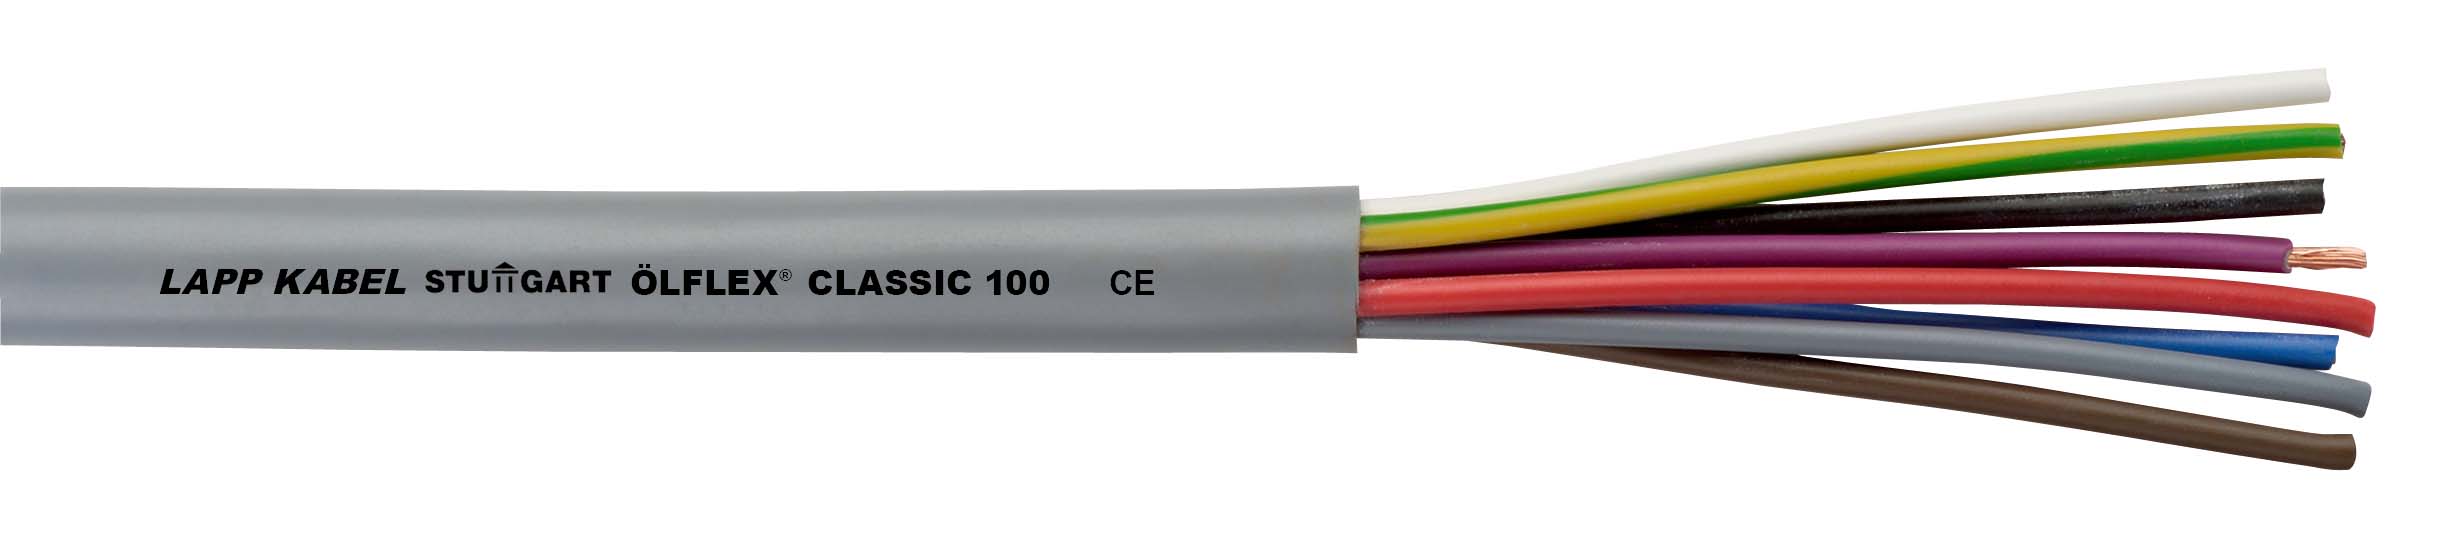 Lapp Kabel&Leitung ÖLFLEX CLASSIC 100 3G1,5 00100644 T500